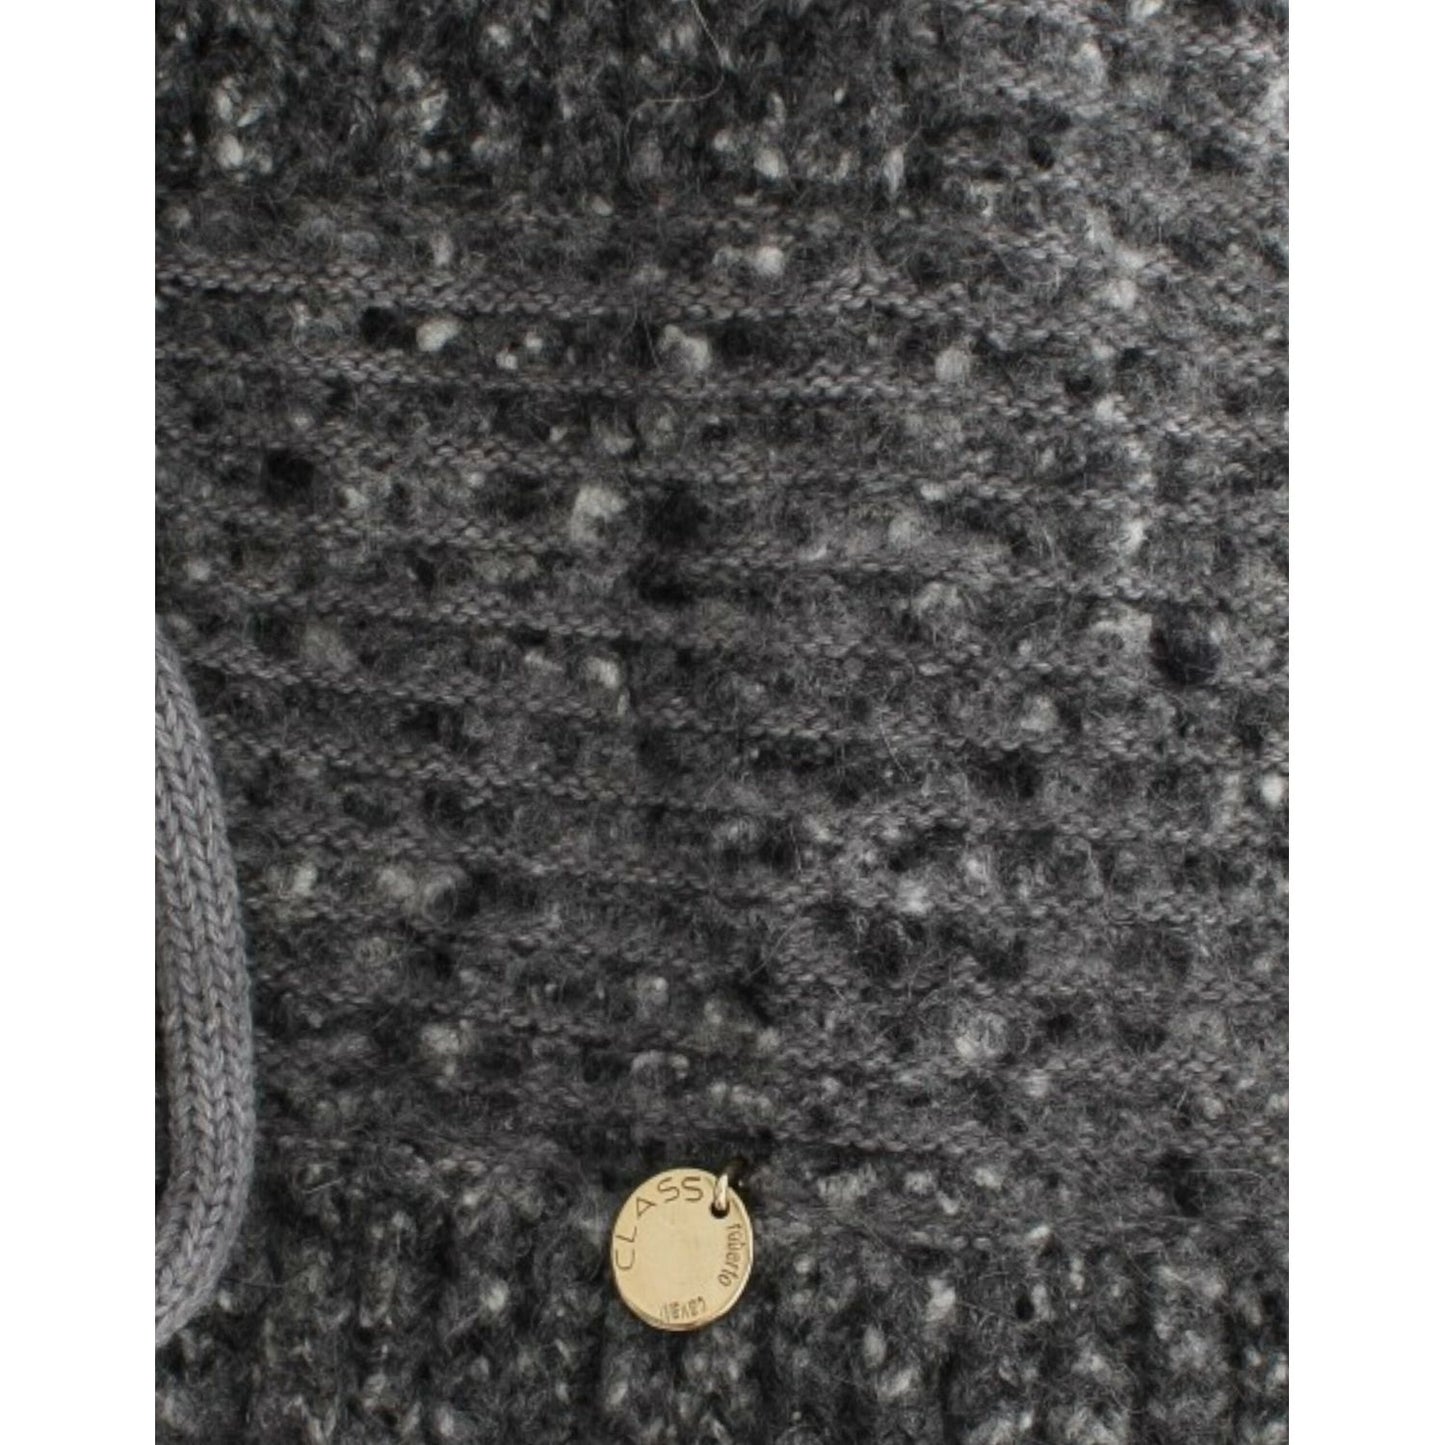 Cavalli Elegant Gray Wool Blend Cardigan gray-wool-knitted-cardigan 8638-gray-wool-knitted-cardigan-7-scaled-41c5a686-88e.jpg